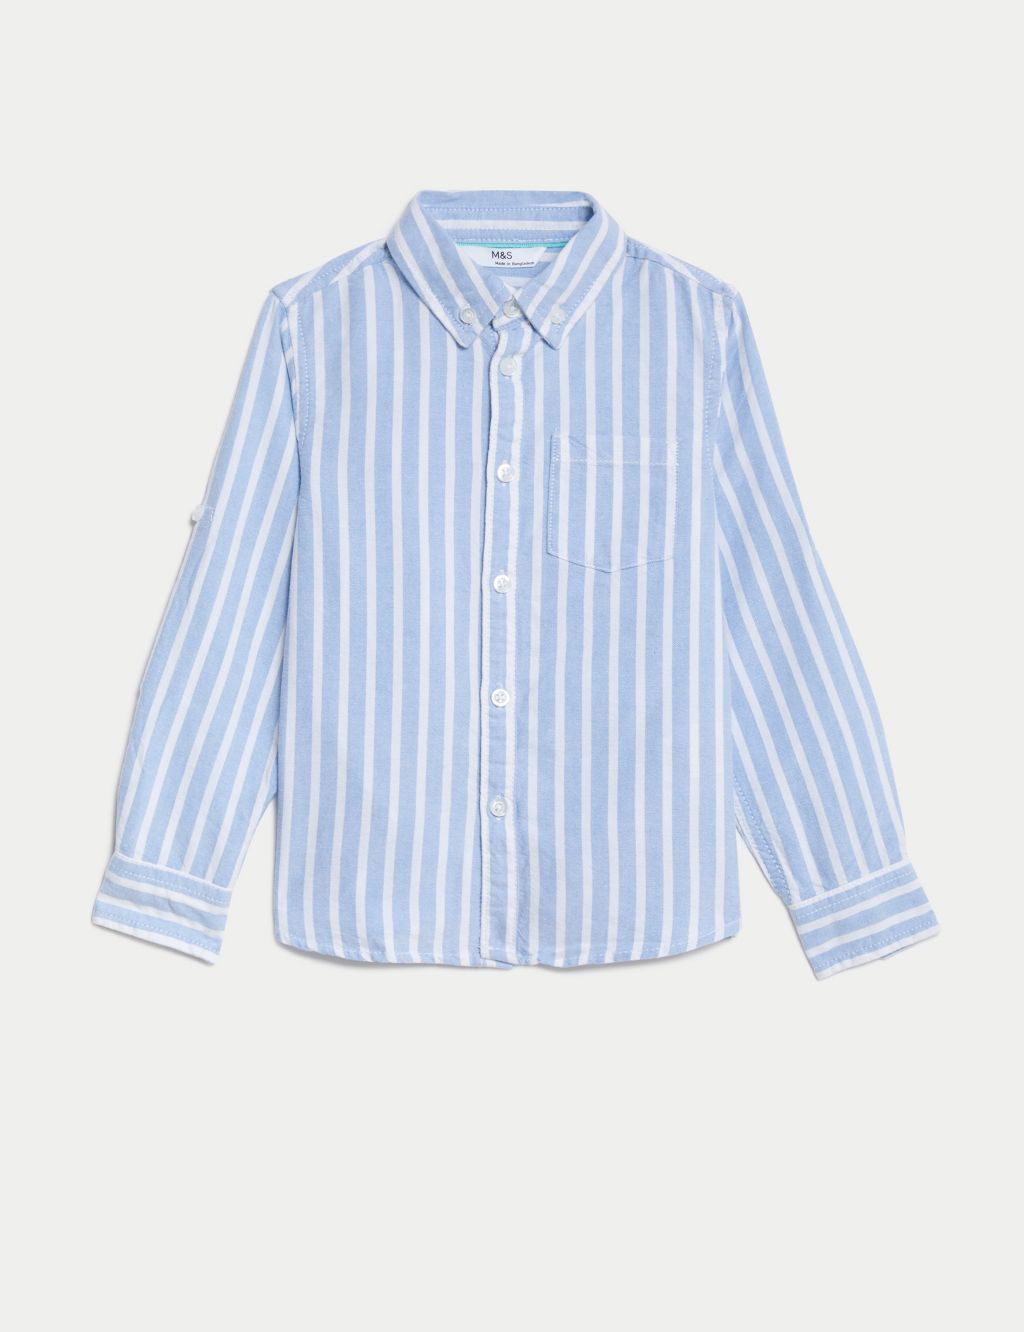 Pure Cotton Striped Oxford Shirt (2-8 Yrs) image 2